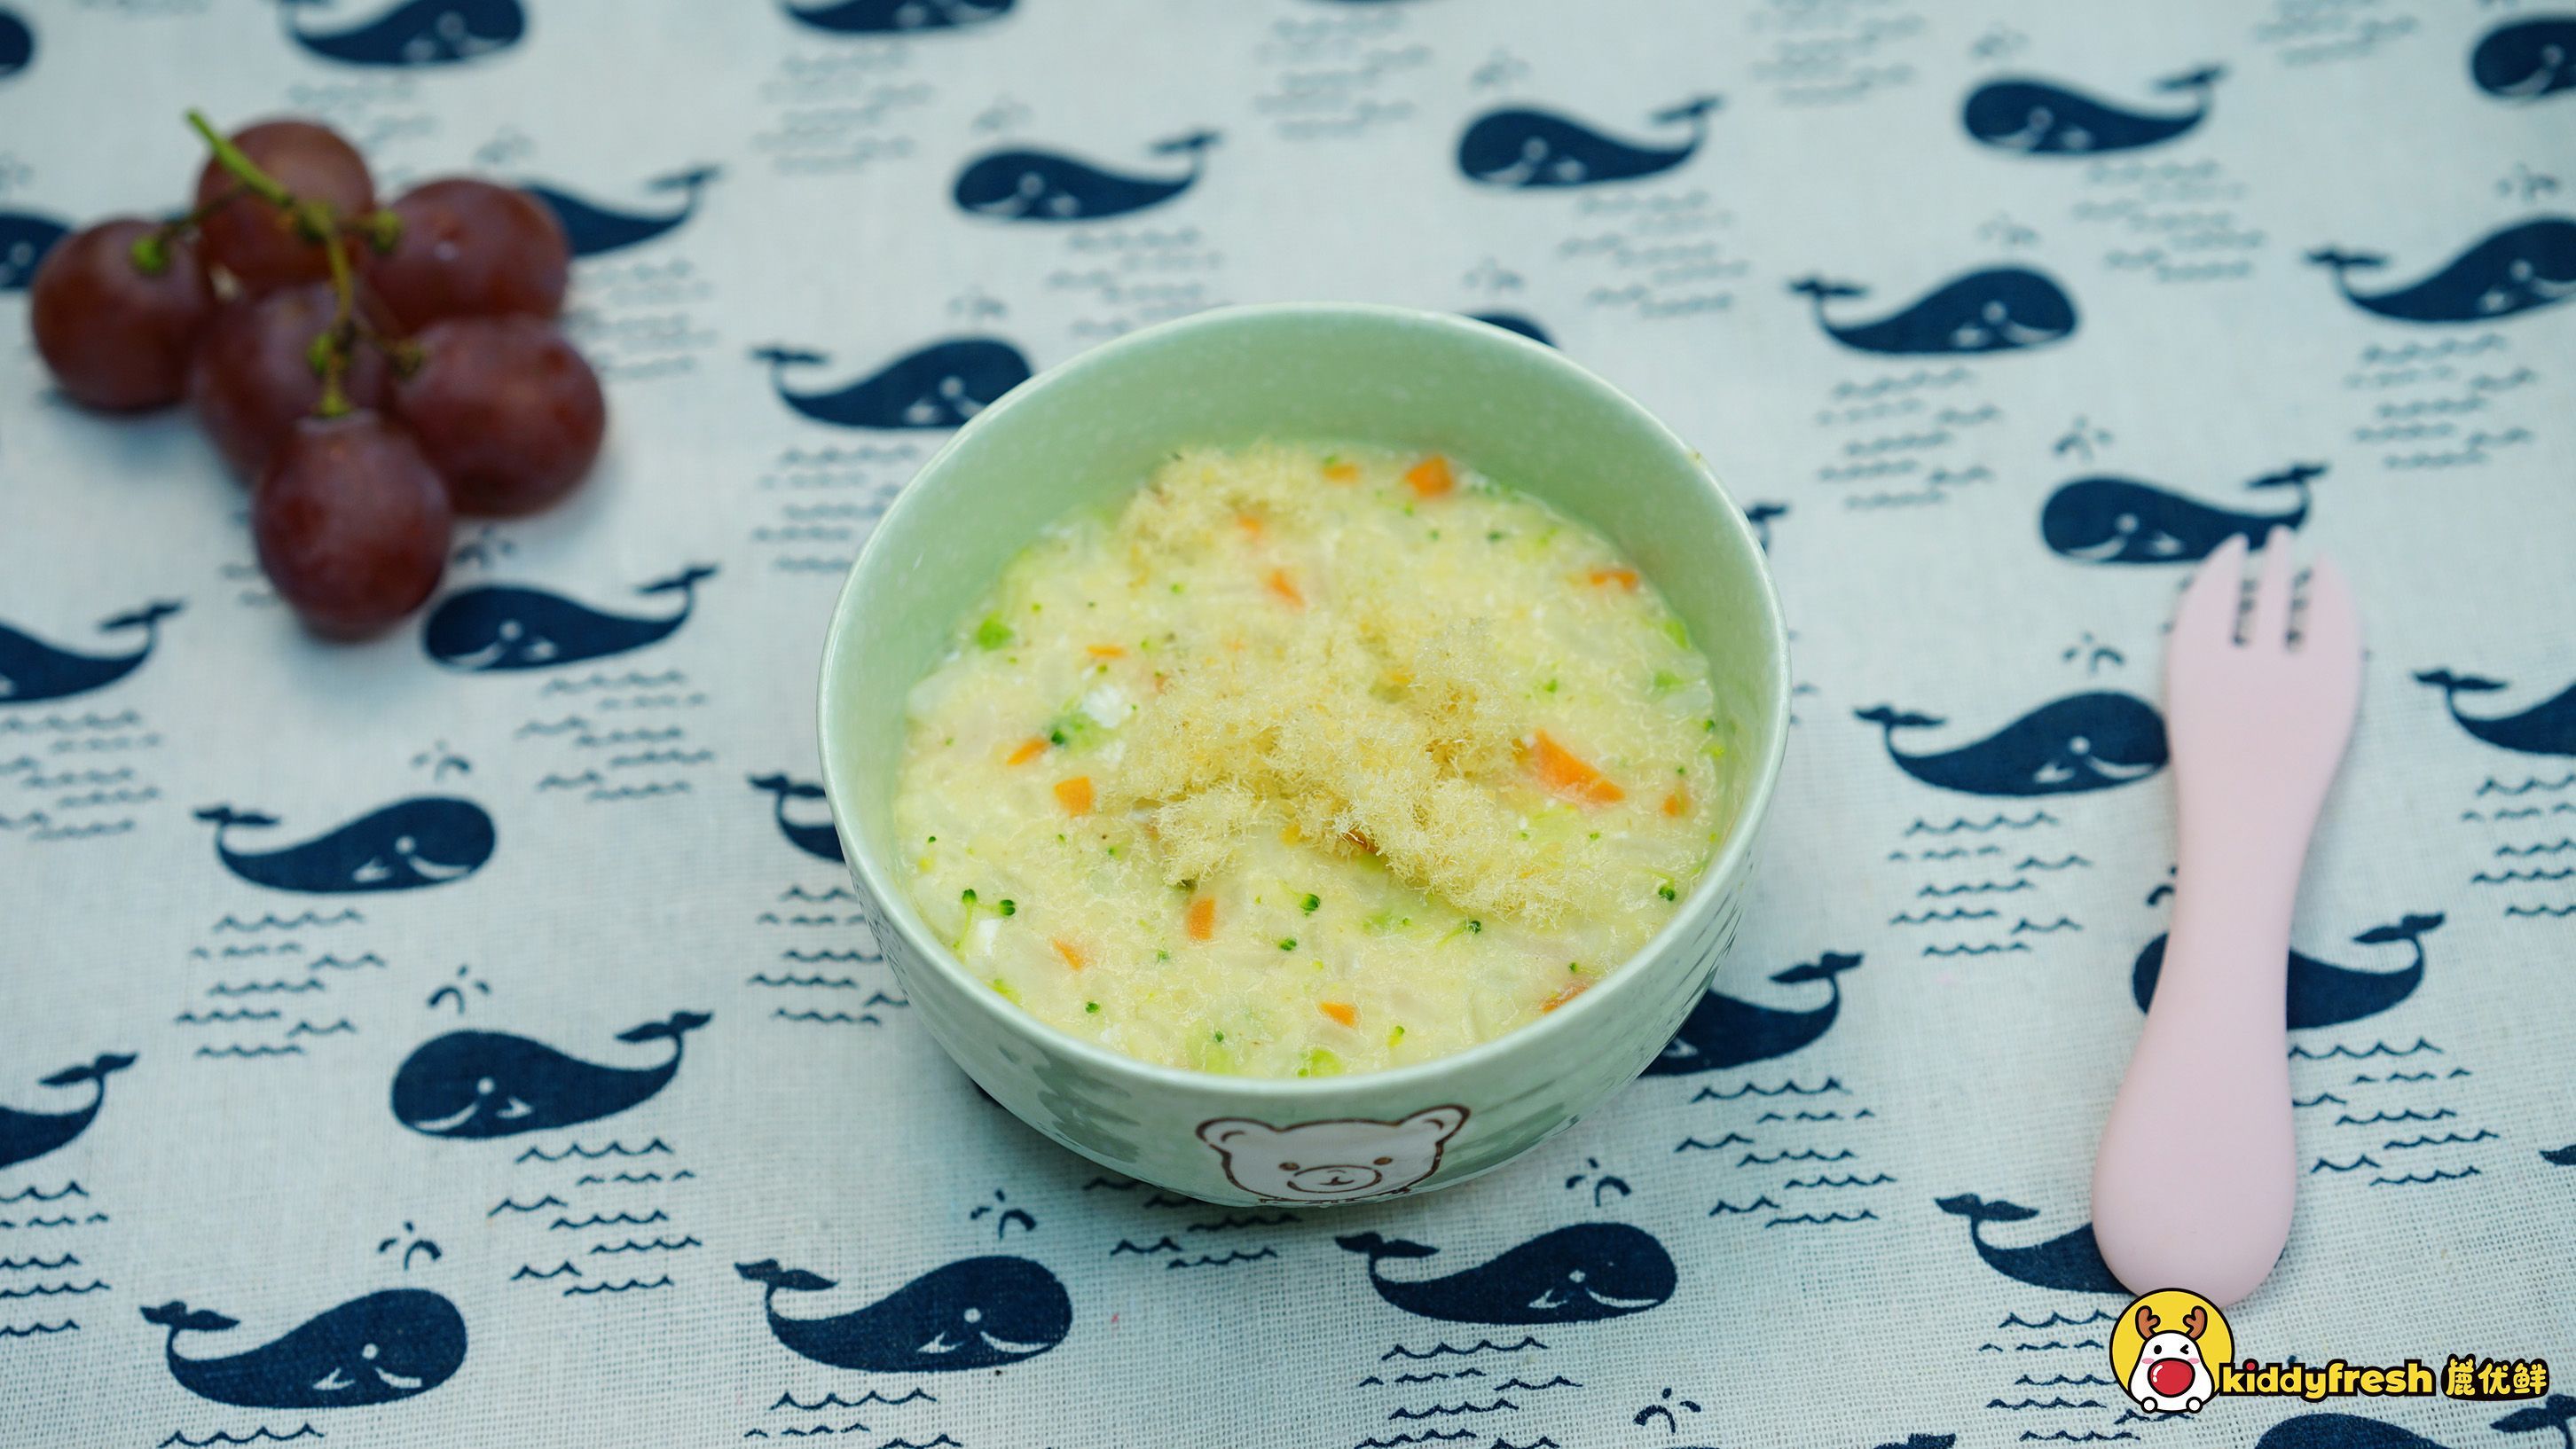 Seasonal Vegetables, Fish Floss and Egg Yolk Congee recipe